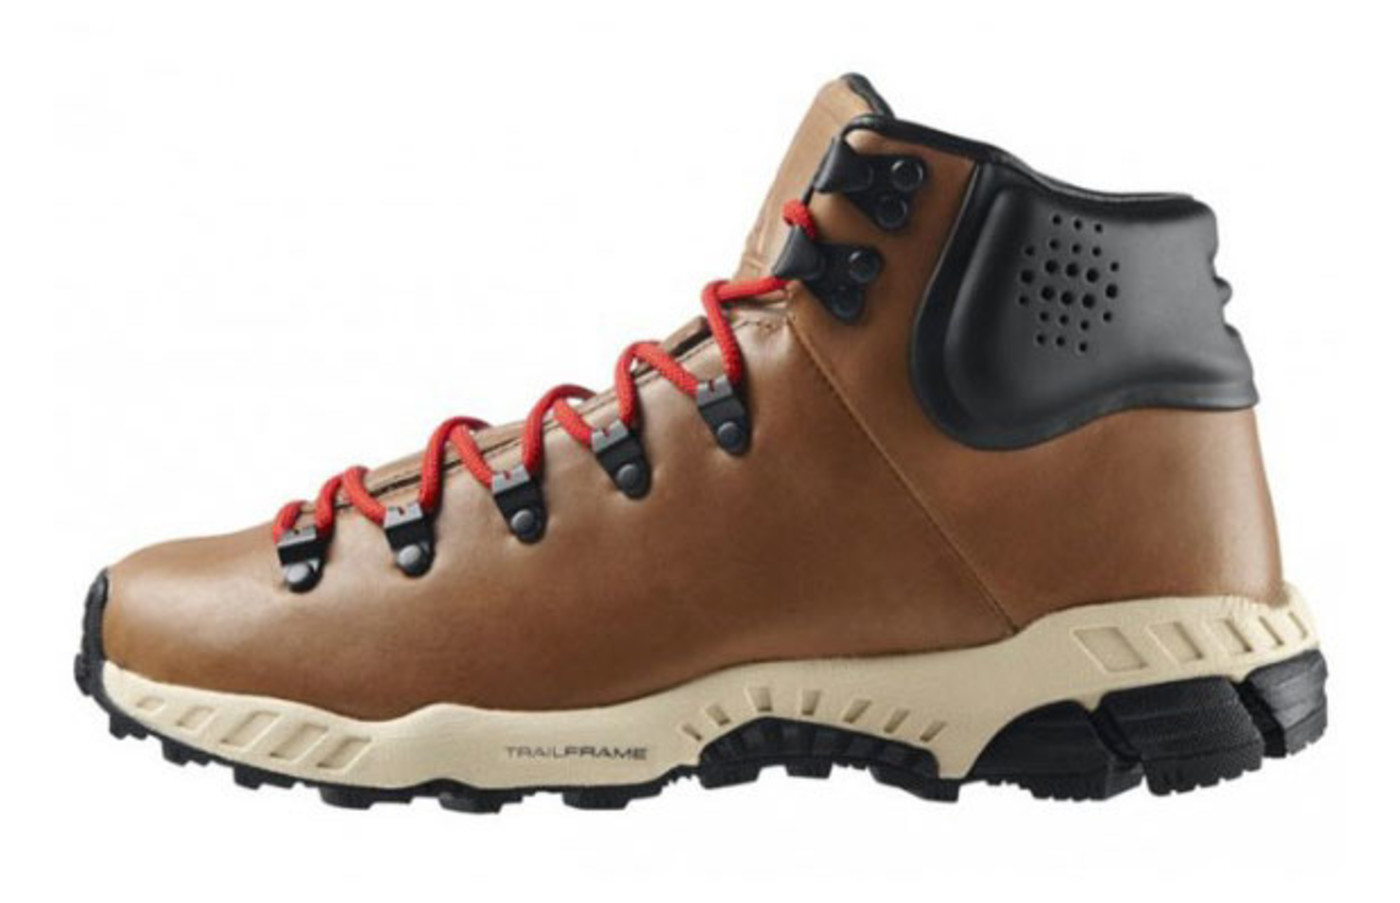 nike trail frame boots